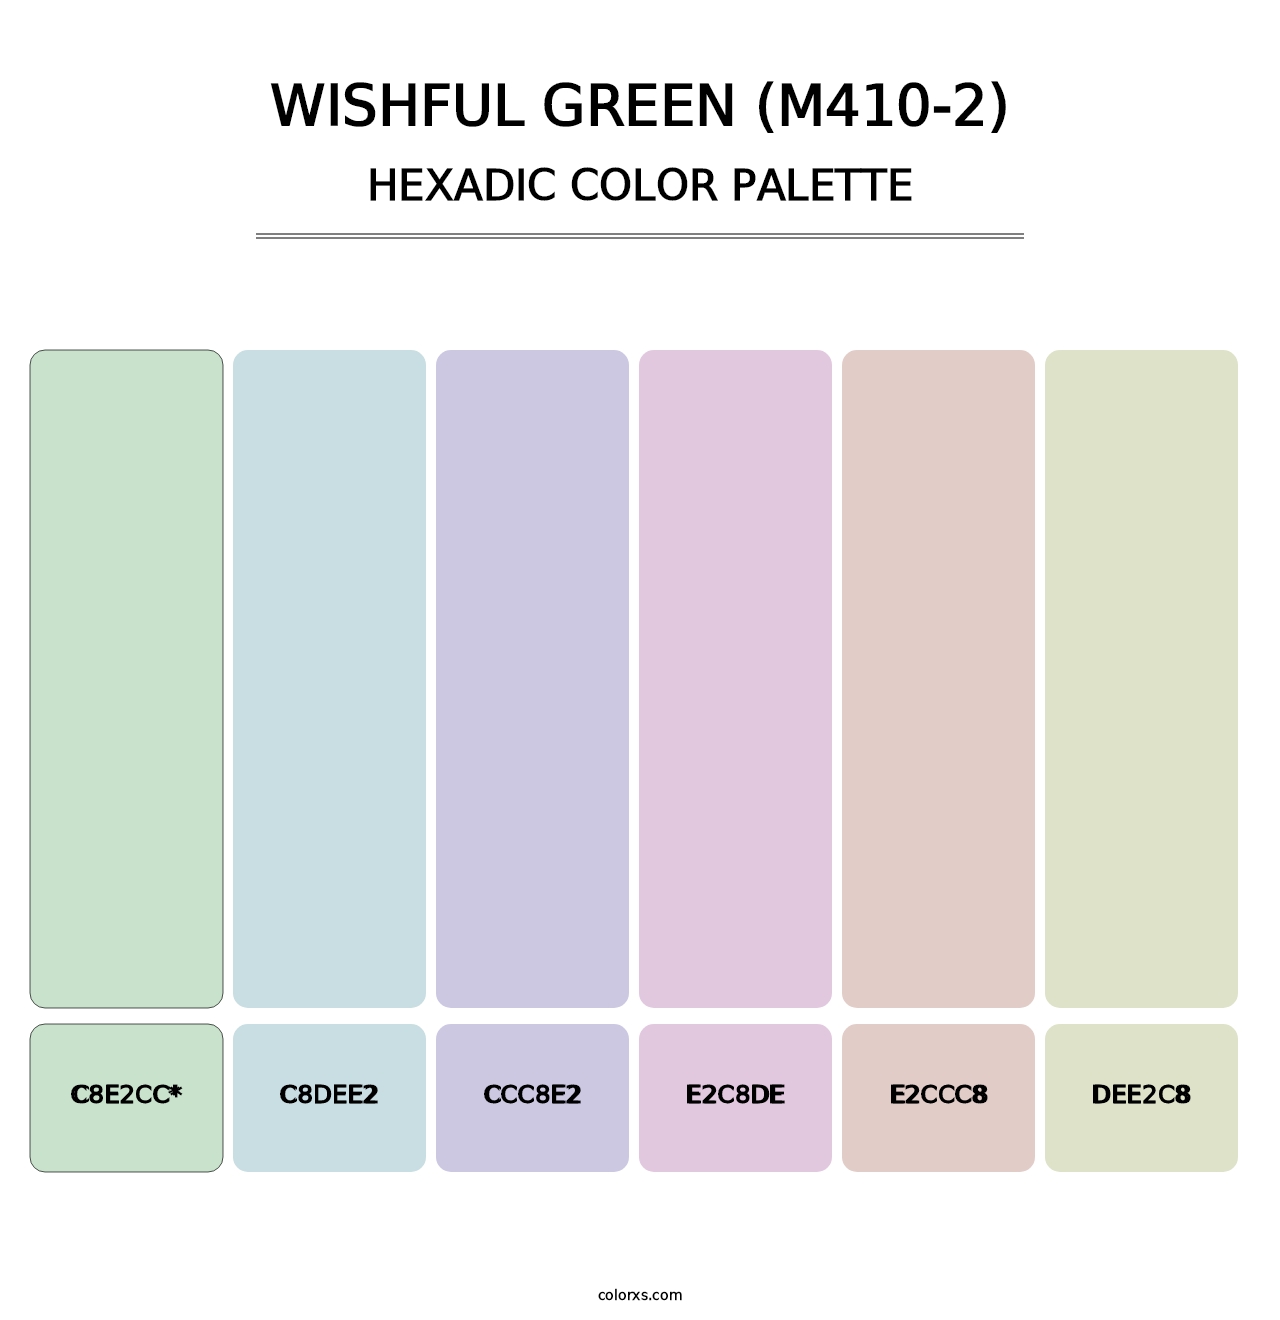 Wishful Green (M410-2) - Hexadic Color Palette